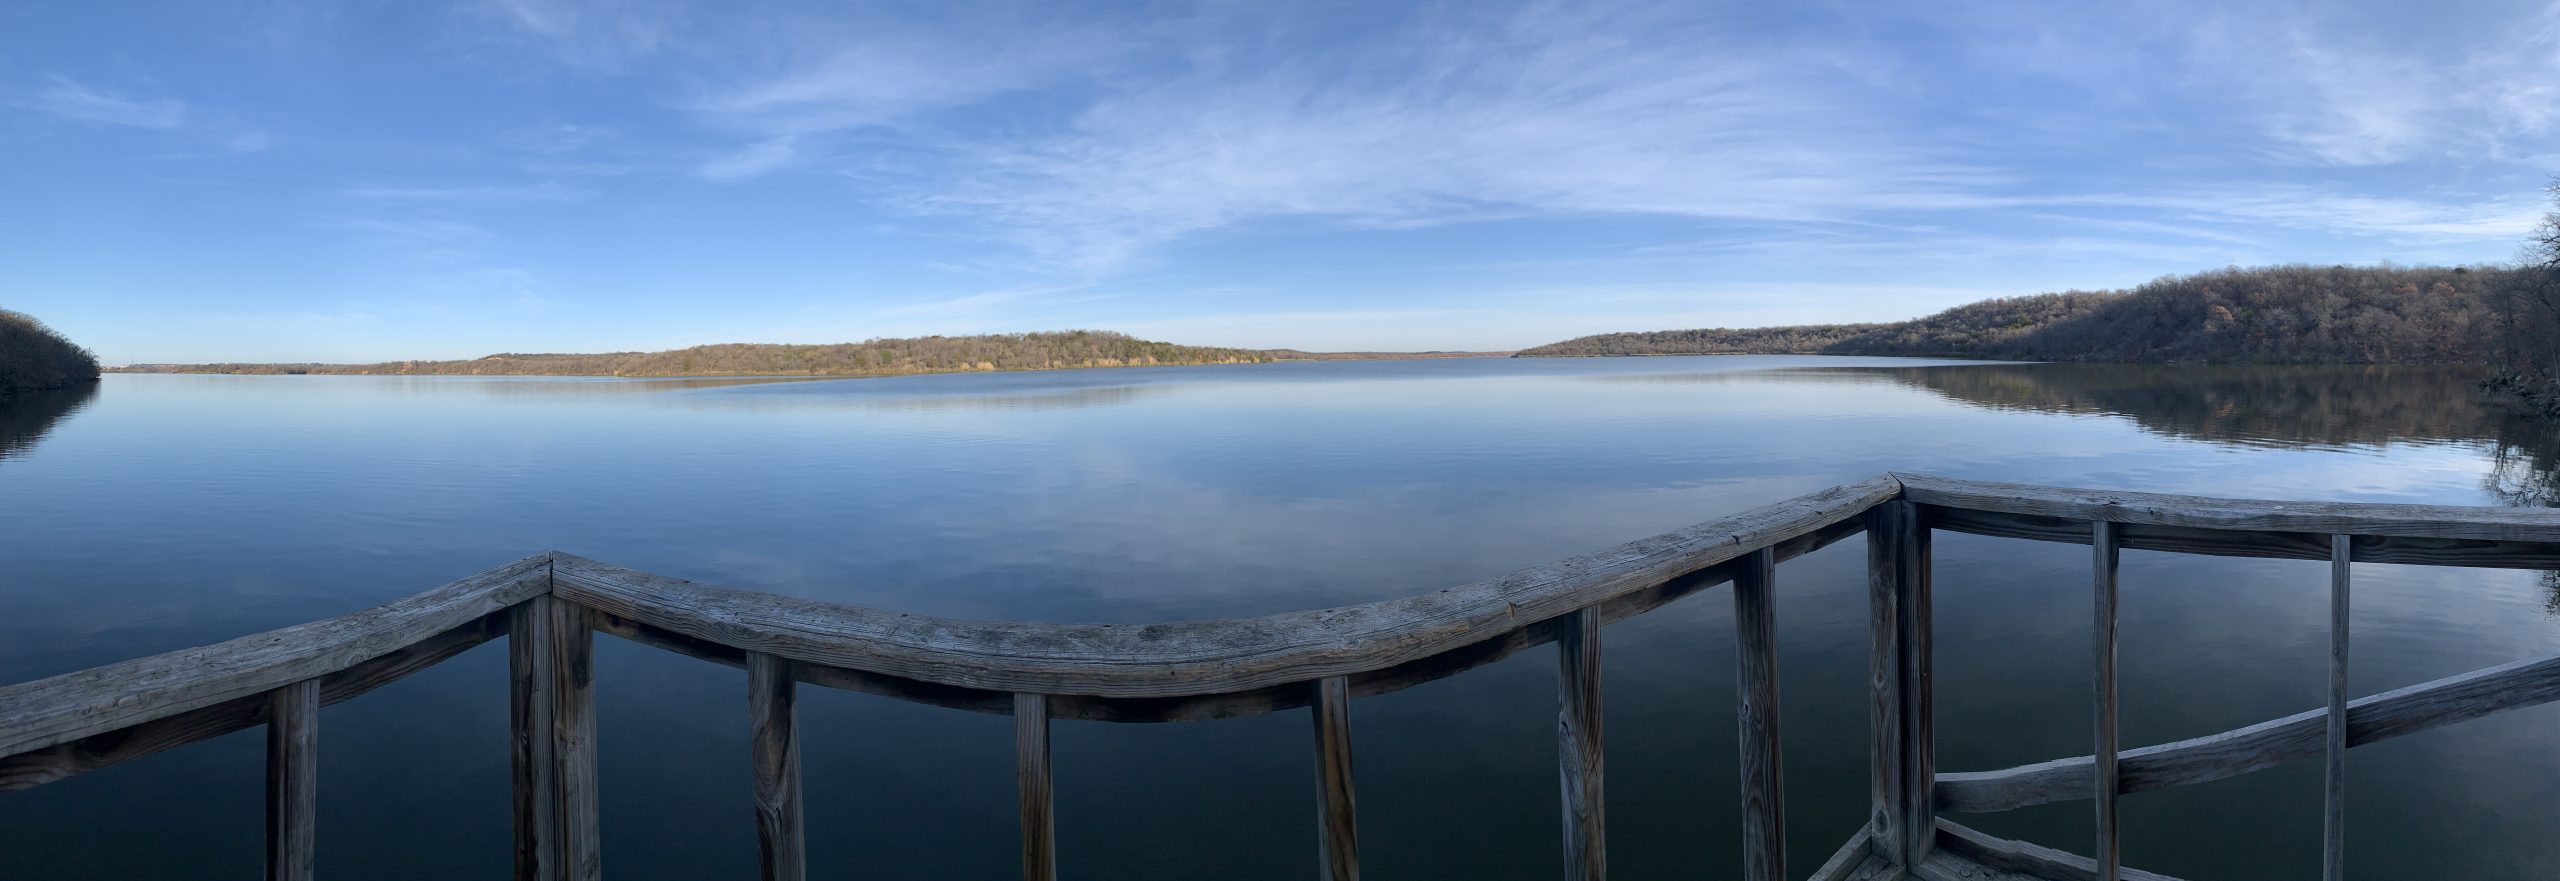 Lake Mineral Wells panoramic